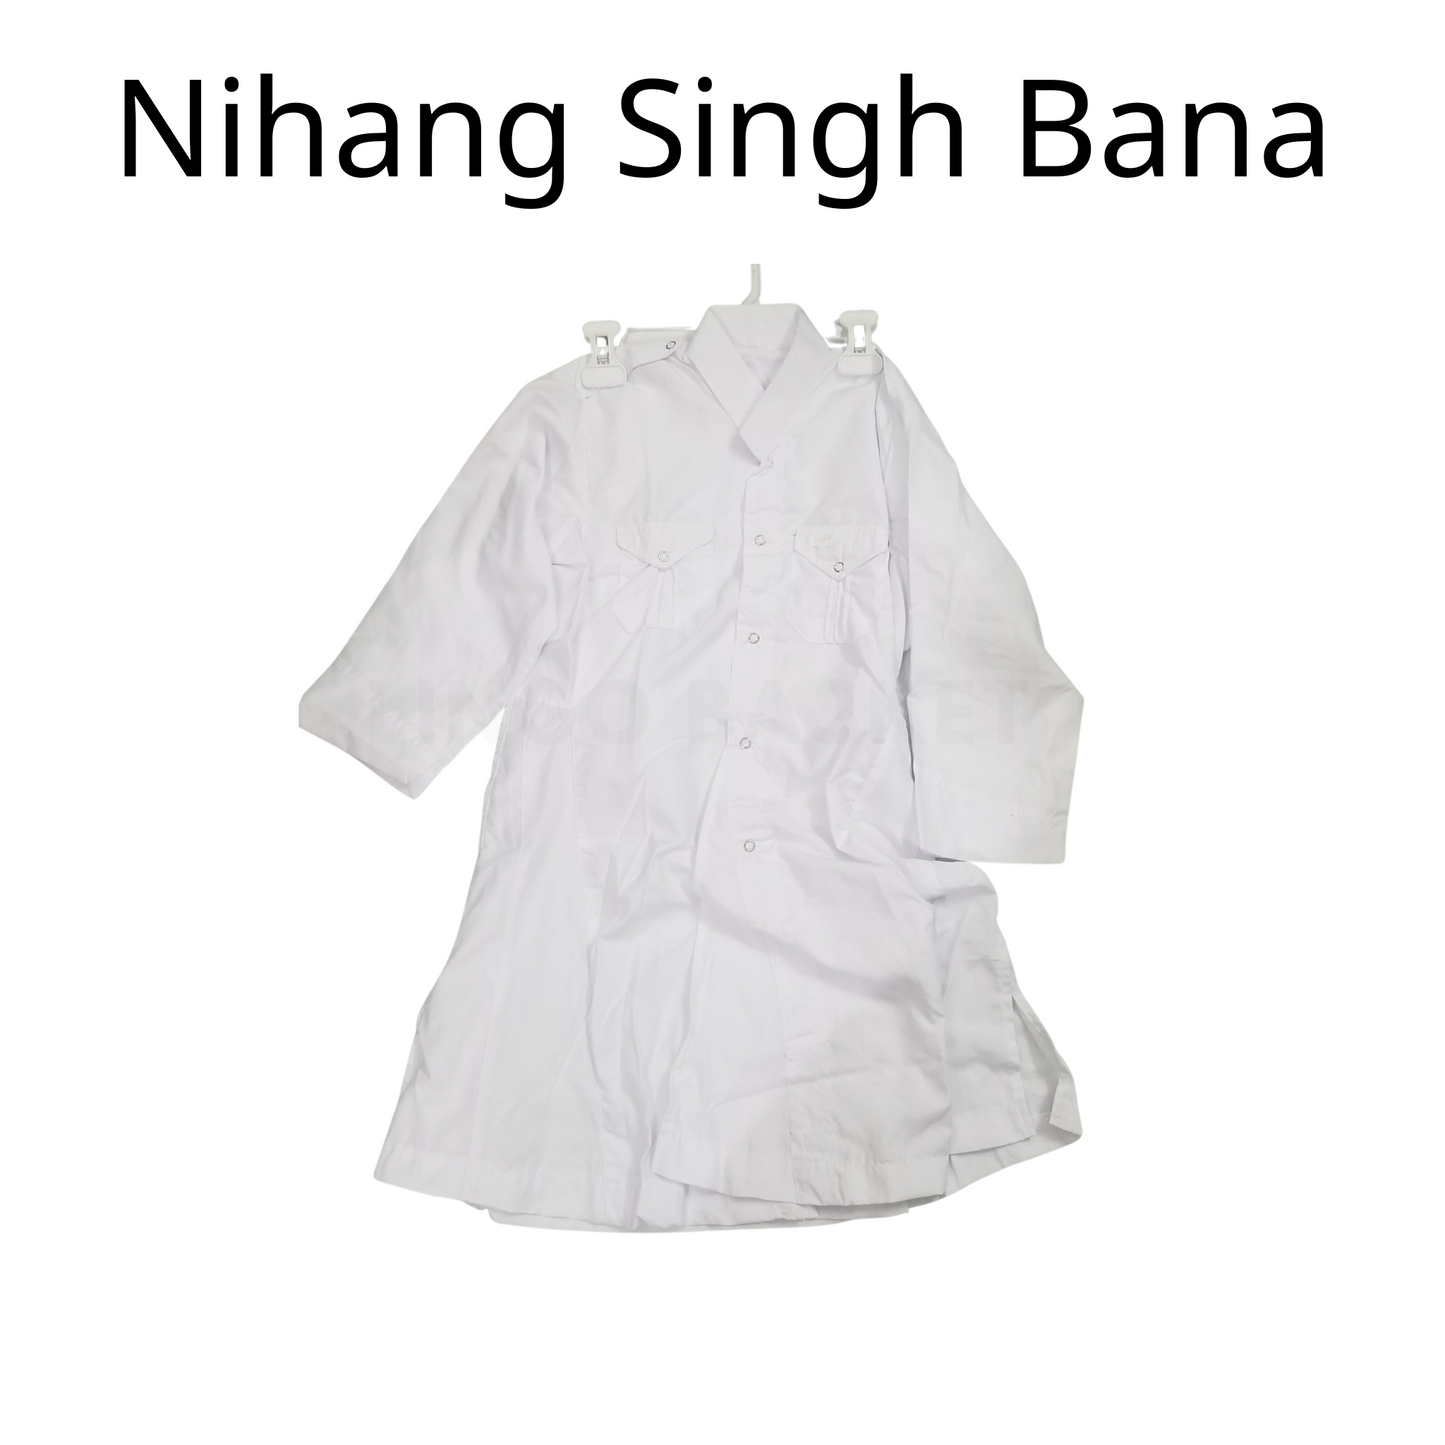 Nihang Singh Bana White Colour